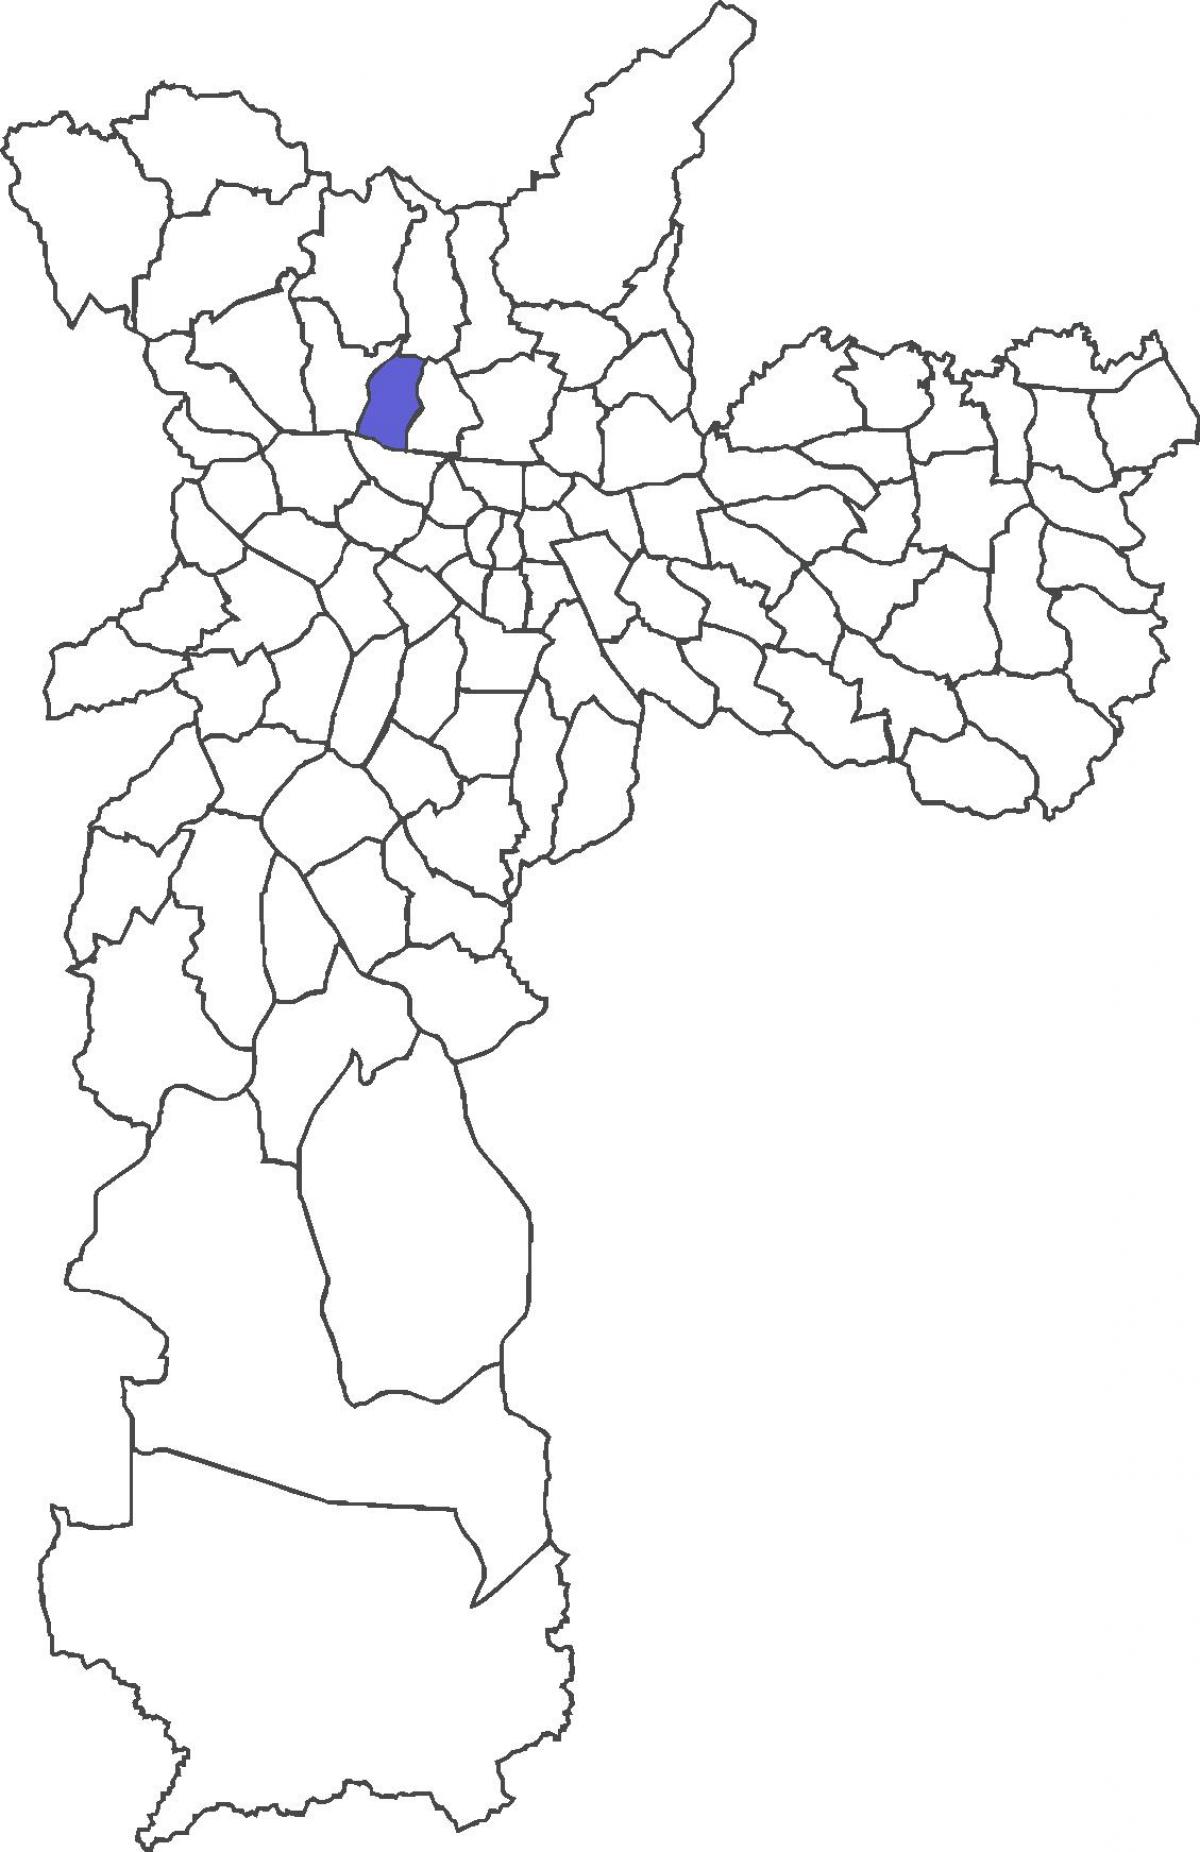 Карта на Limão област